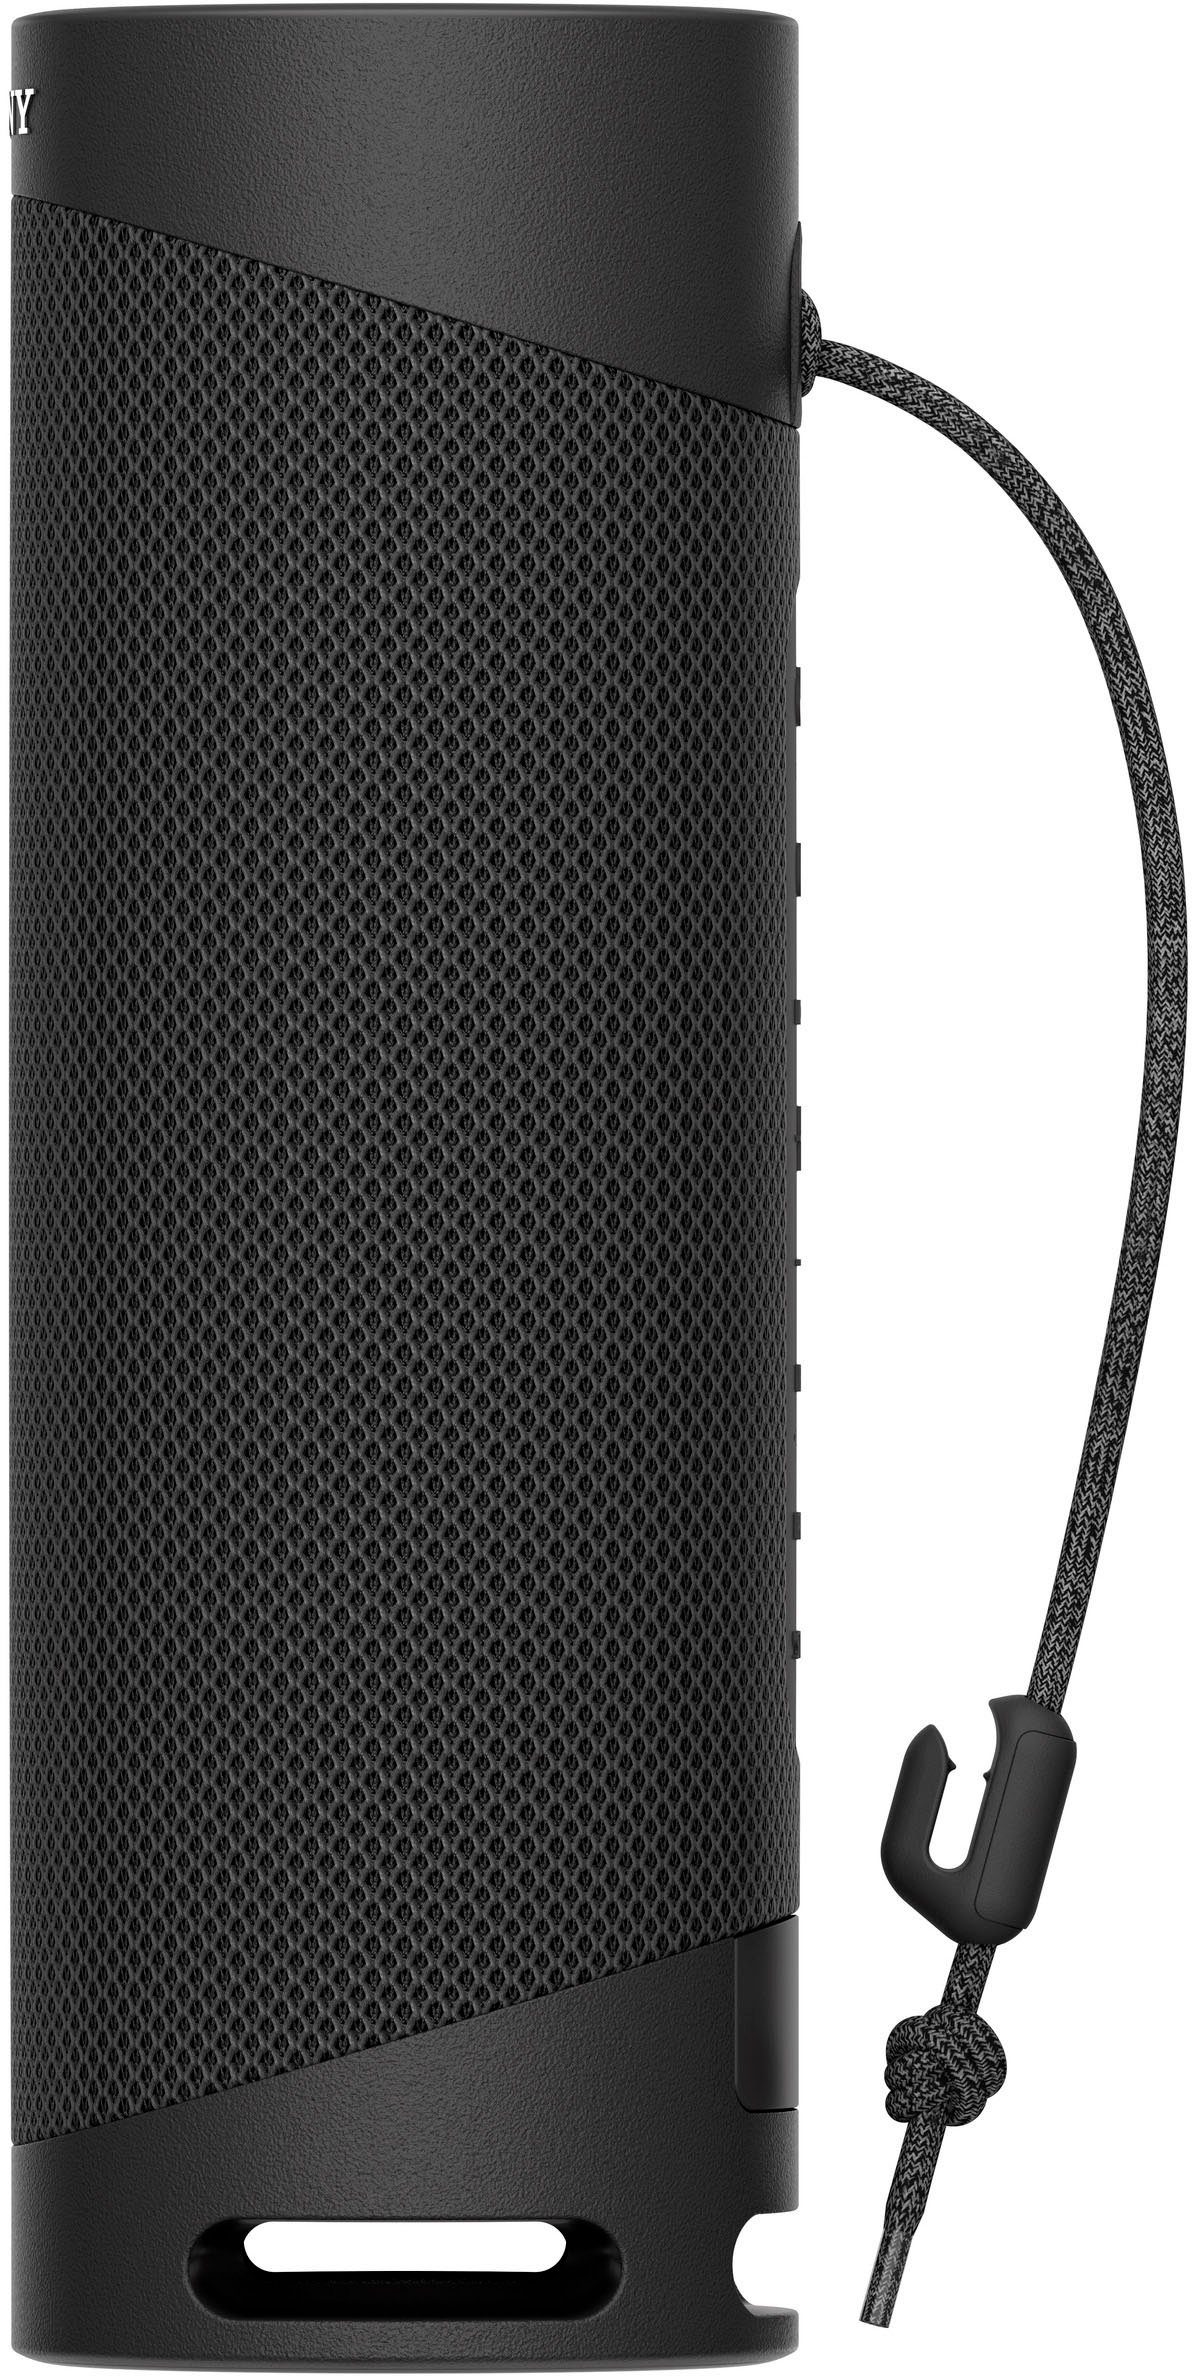 Sony SRS-XB23 tragbarer, 12h kabelloser schwarz Akkulaufzeit, (Bluetooth, Extra wasserabweisend, Bass) Bluetooth-Lautsprecher